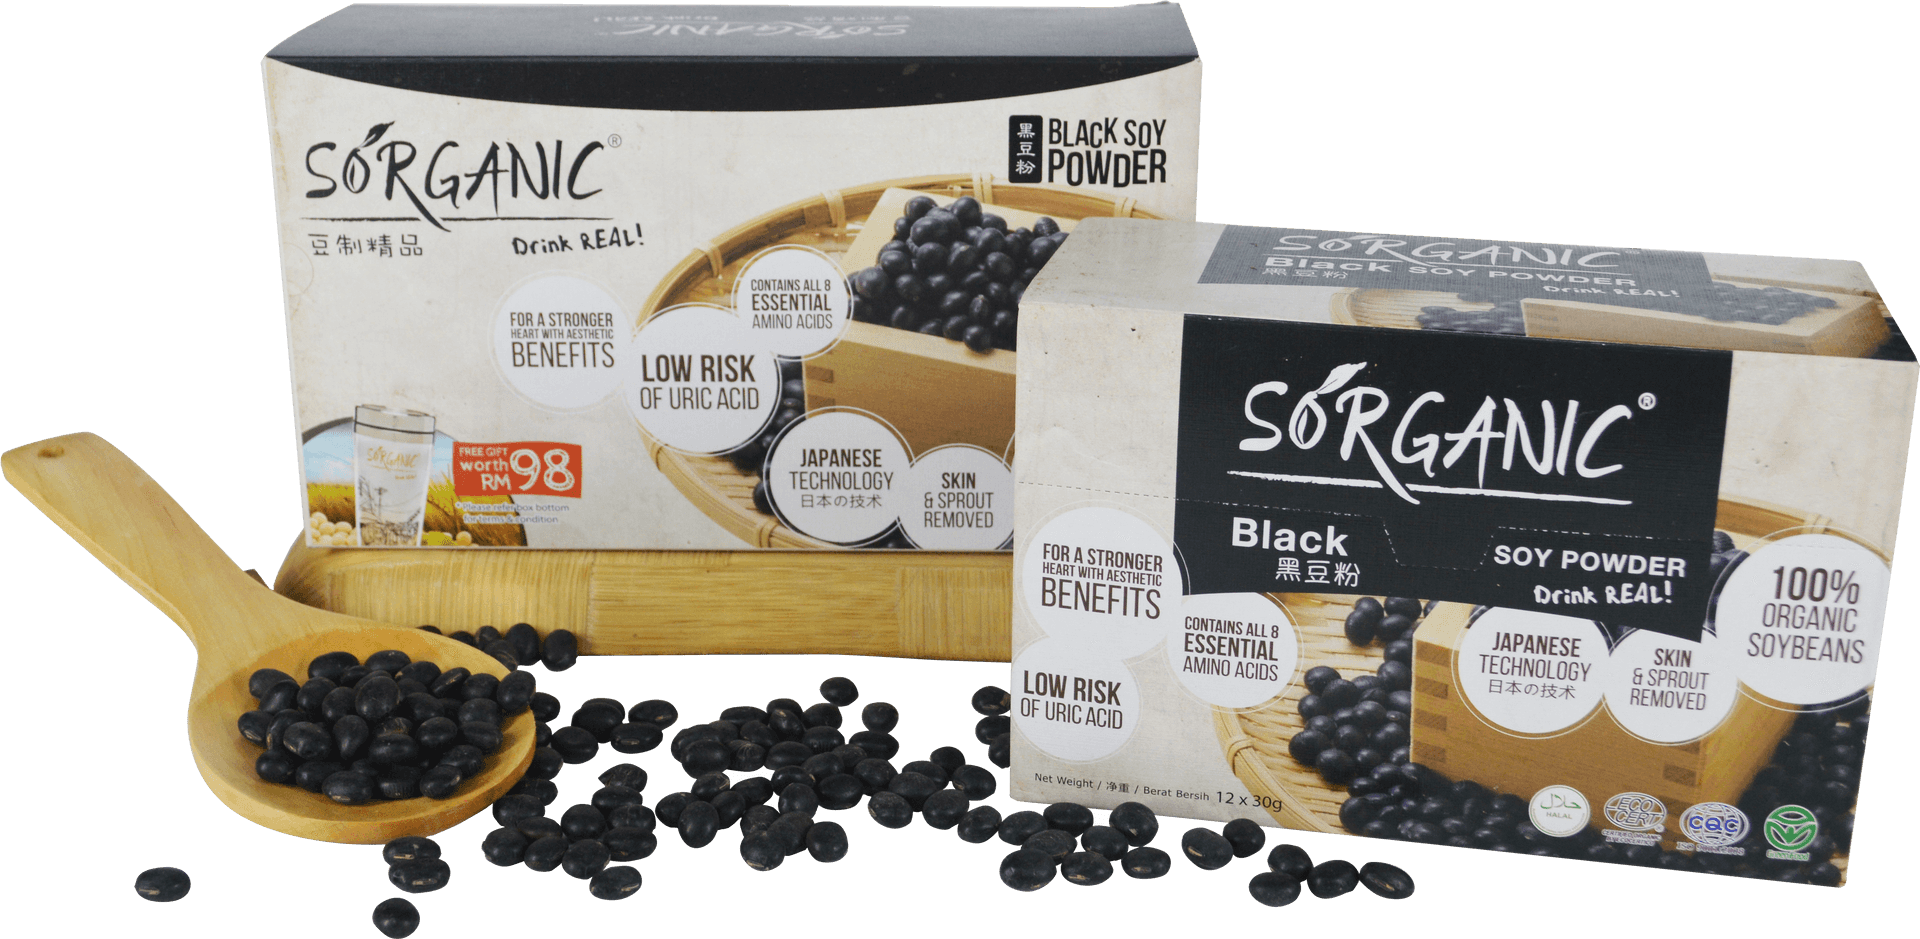 Sorganic Black Soy Powder Product Packaging PNG